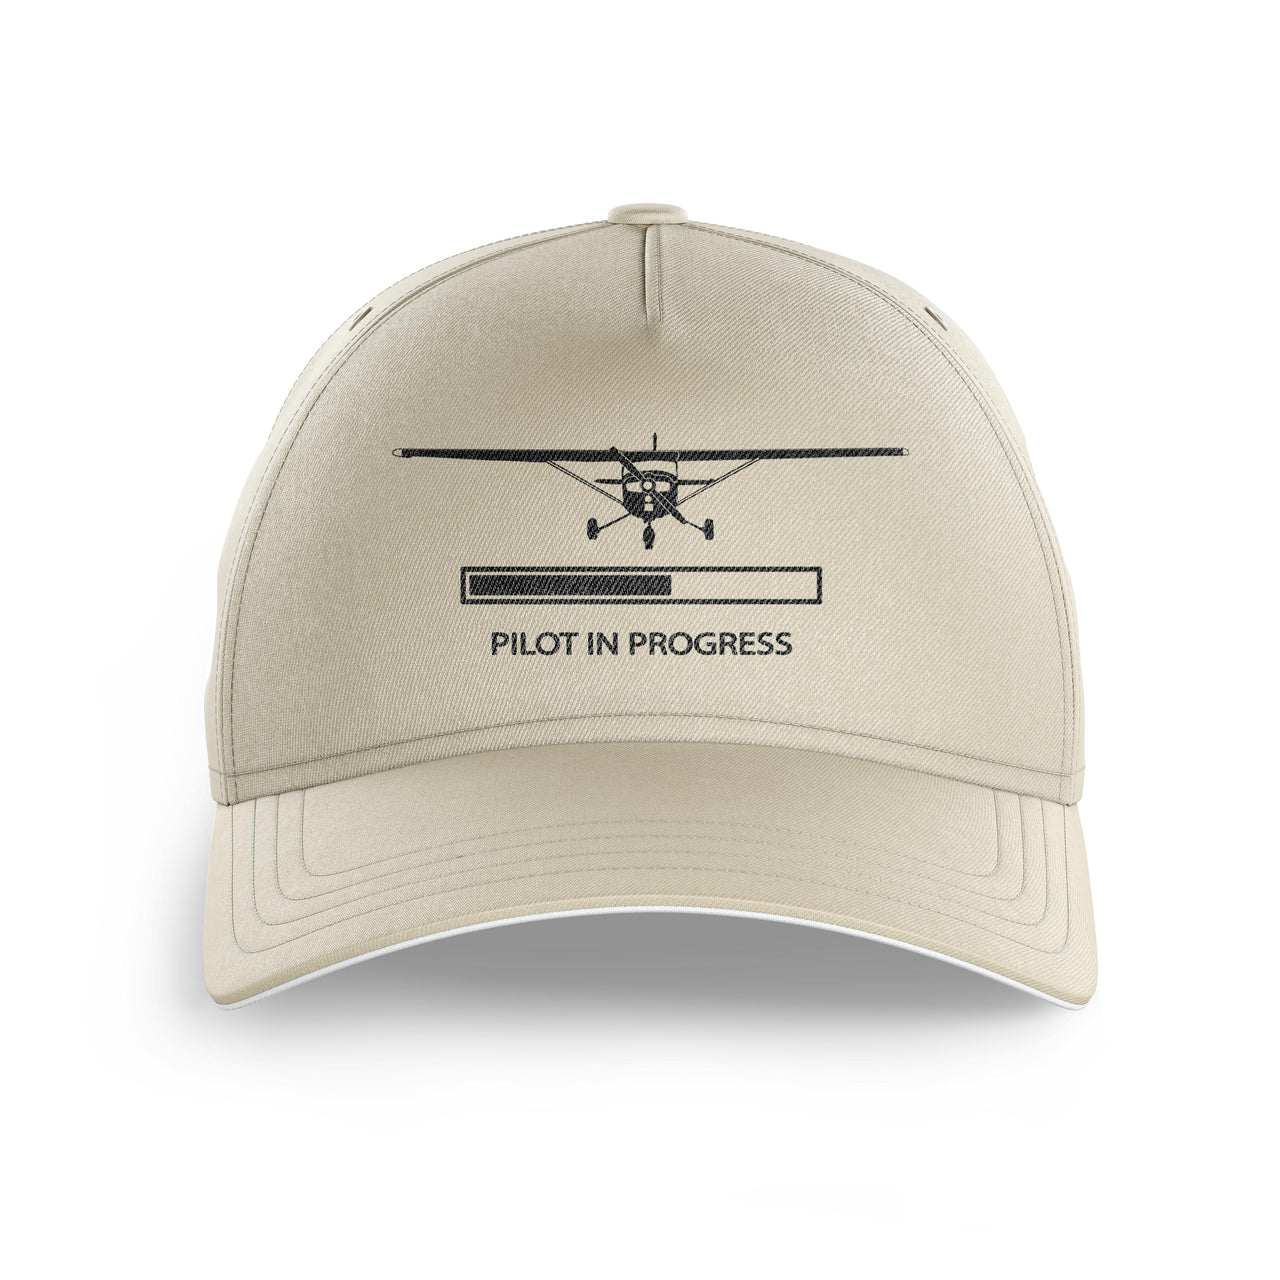 Pilot In Progress (Cessna) Printed Hats